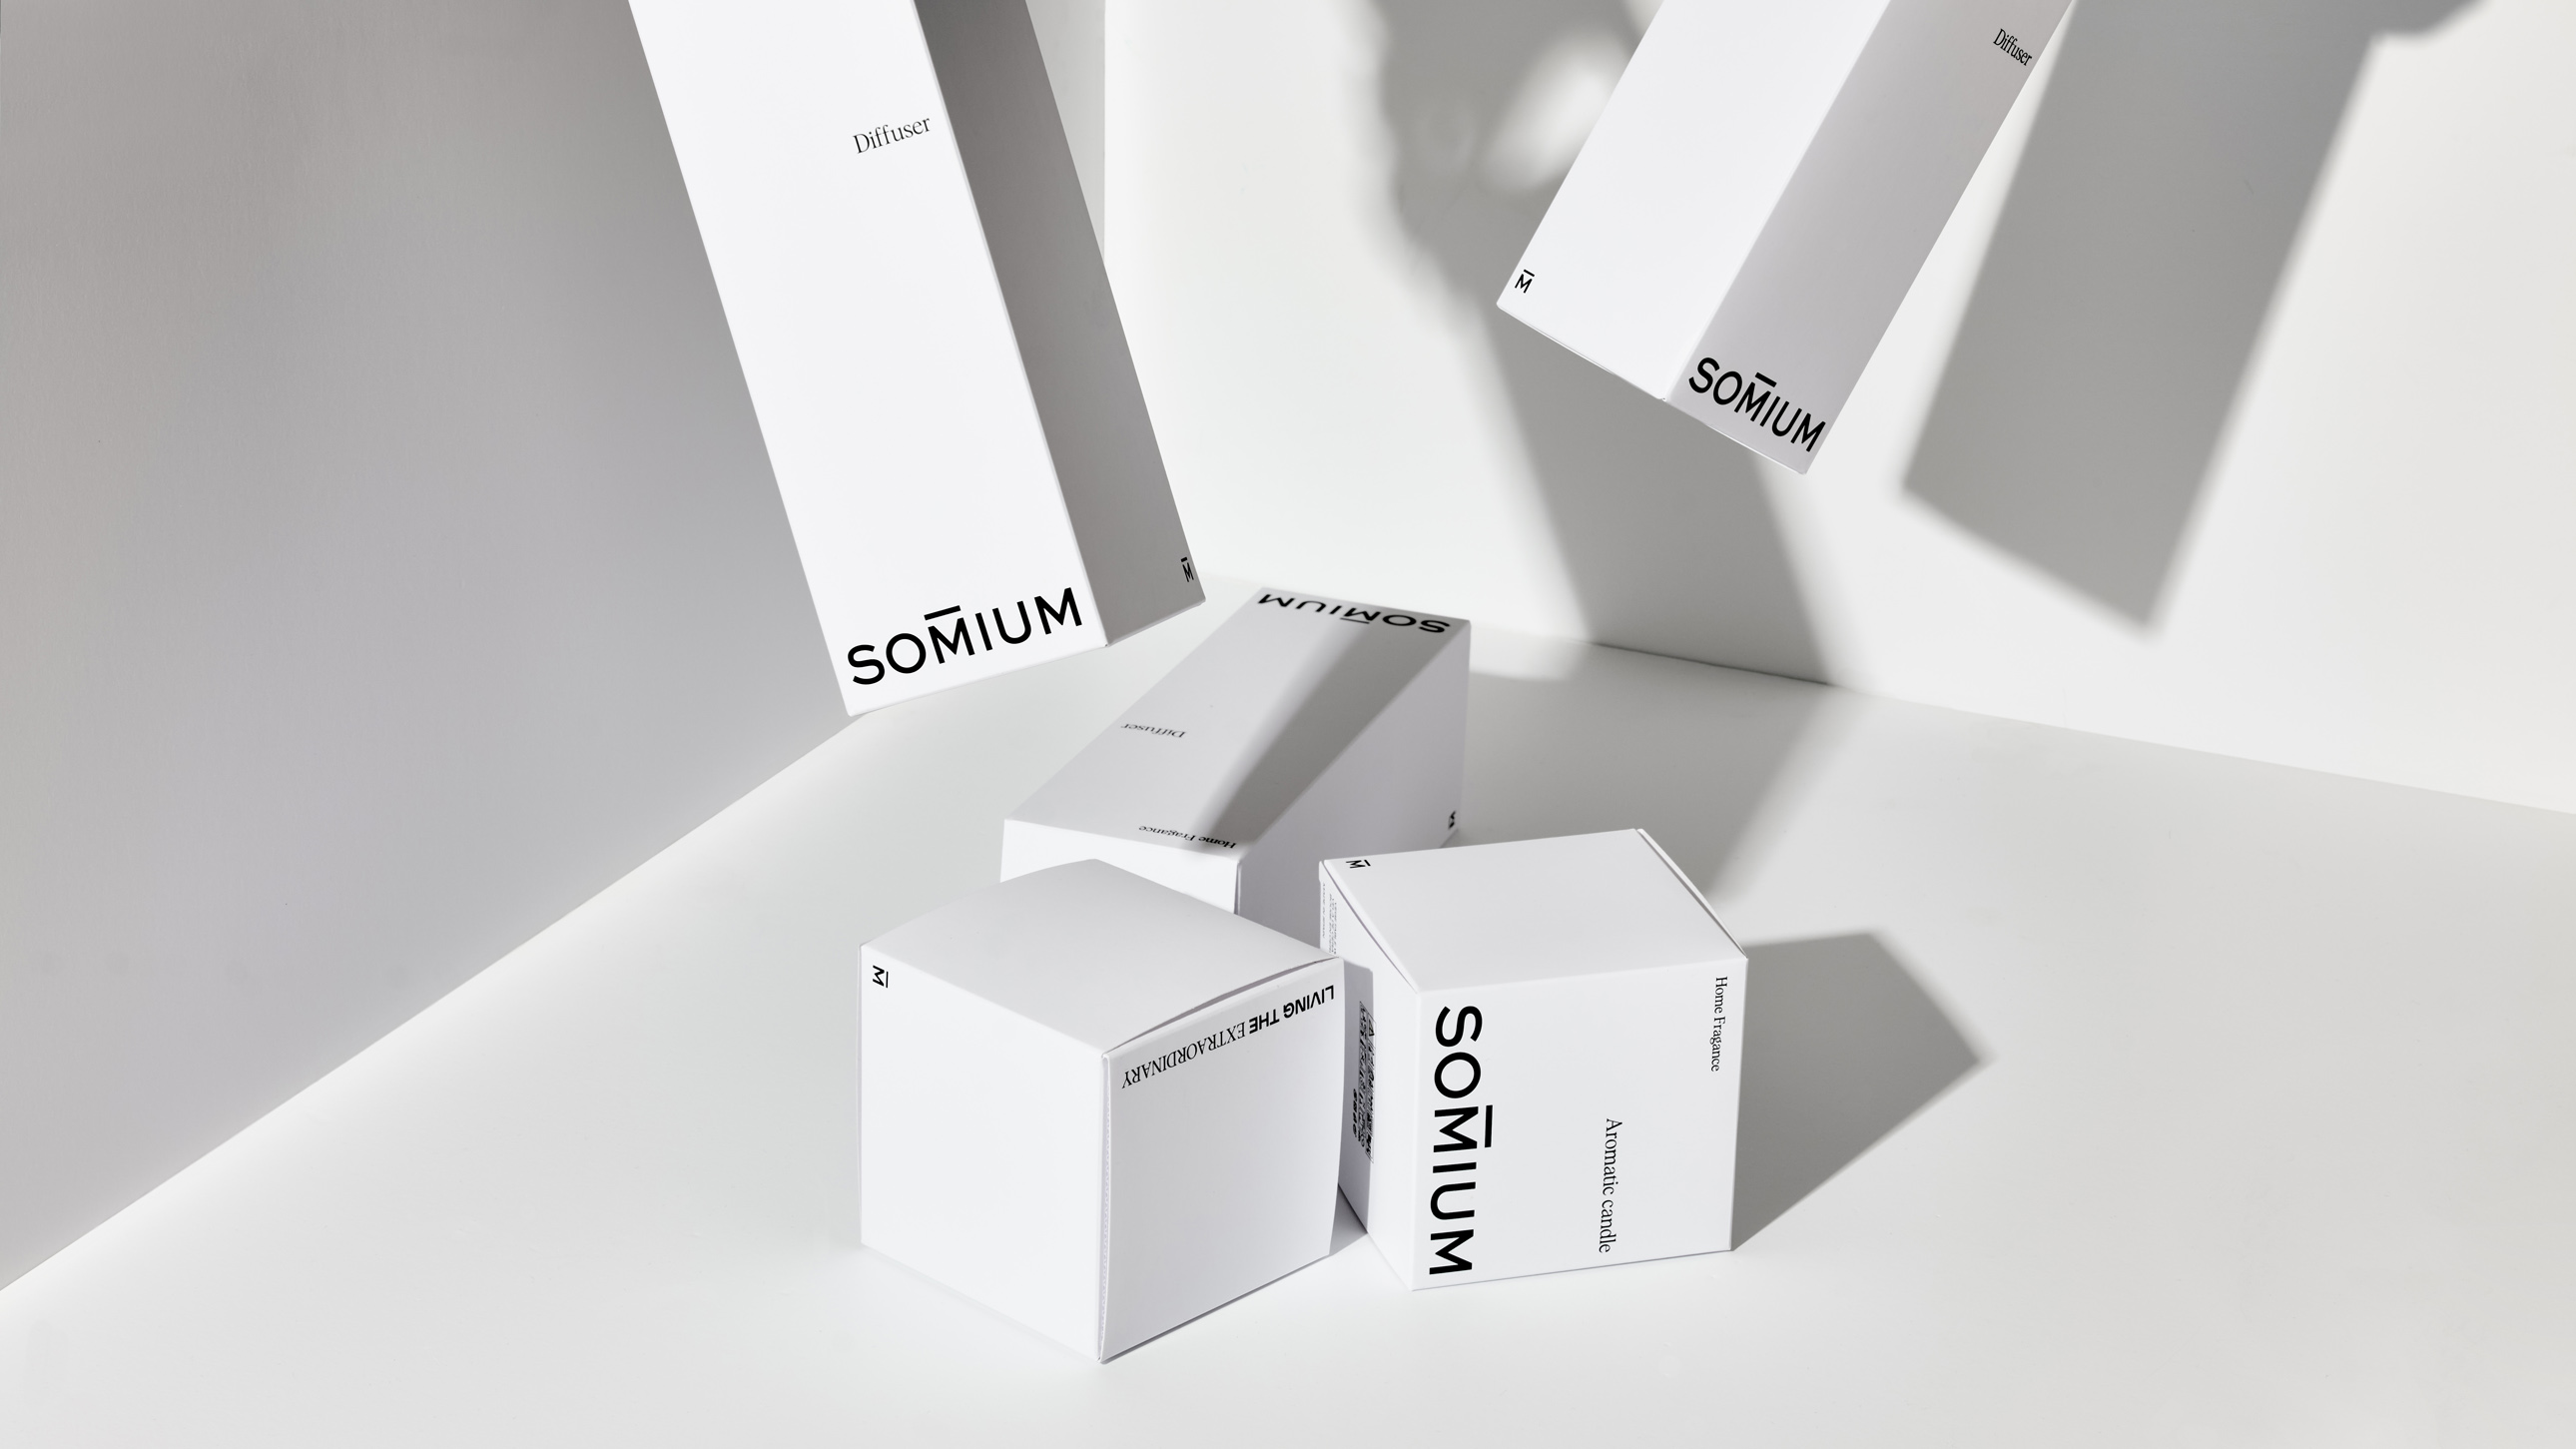 diseno-packaging-grafico-fragance-perfume-somium-evangelisti-1.jpg